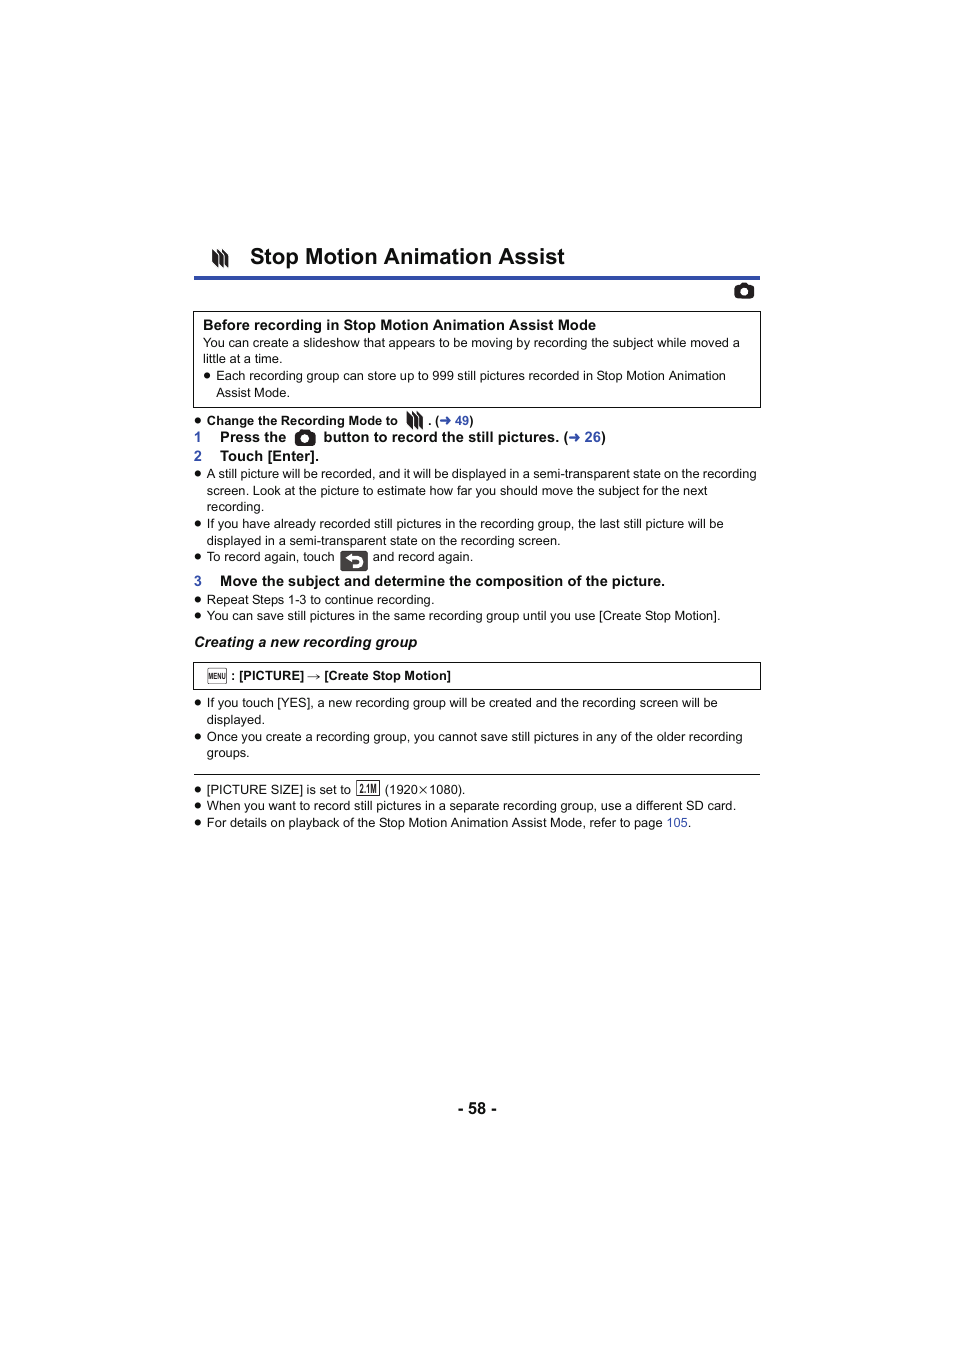 Stop motion animation assist, L 58 | Panasonic HC-W850K User Manual | Page 58 / 220